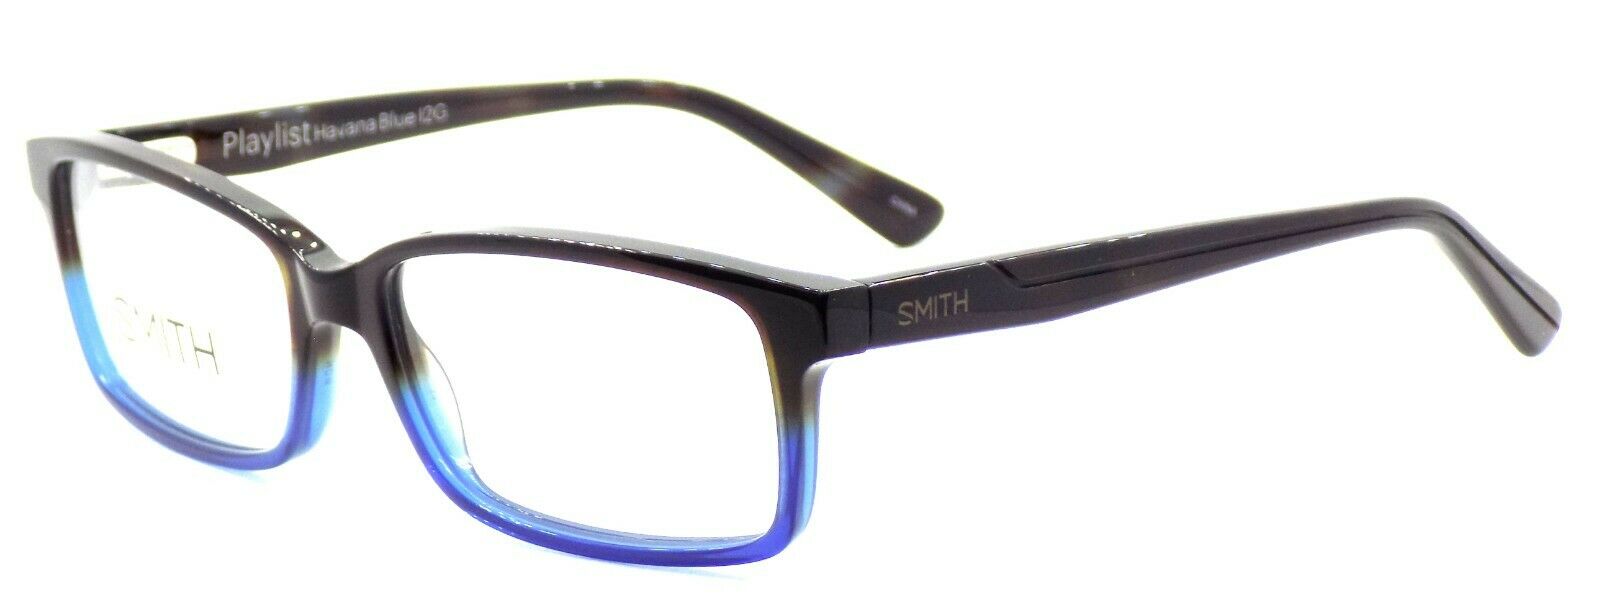 1-SMITH Optics Playlist I2G Unisex Eyeglasses Frames 54-16-135 Havana Blue + CASE-716737723128-IKSpecs